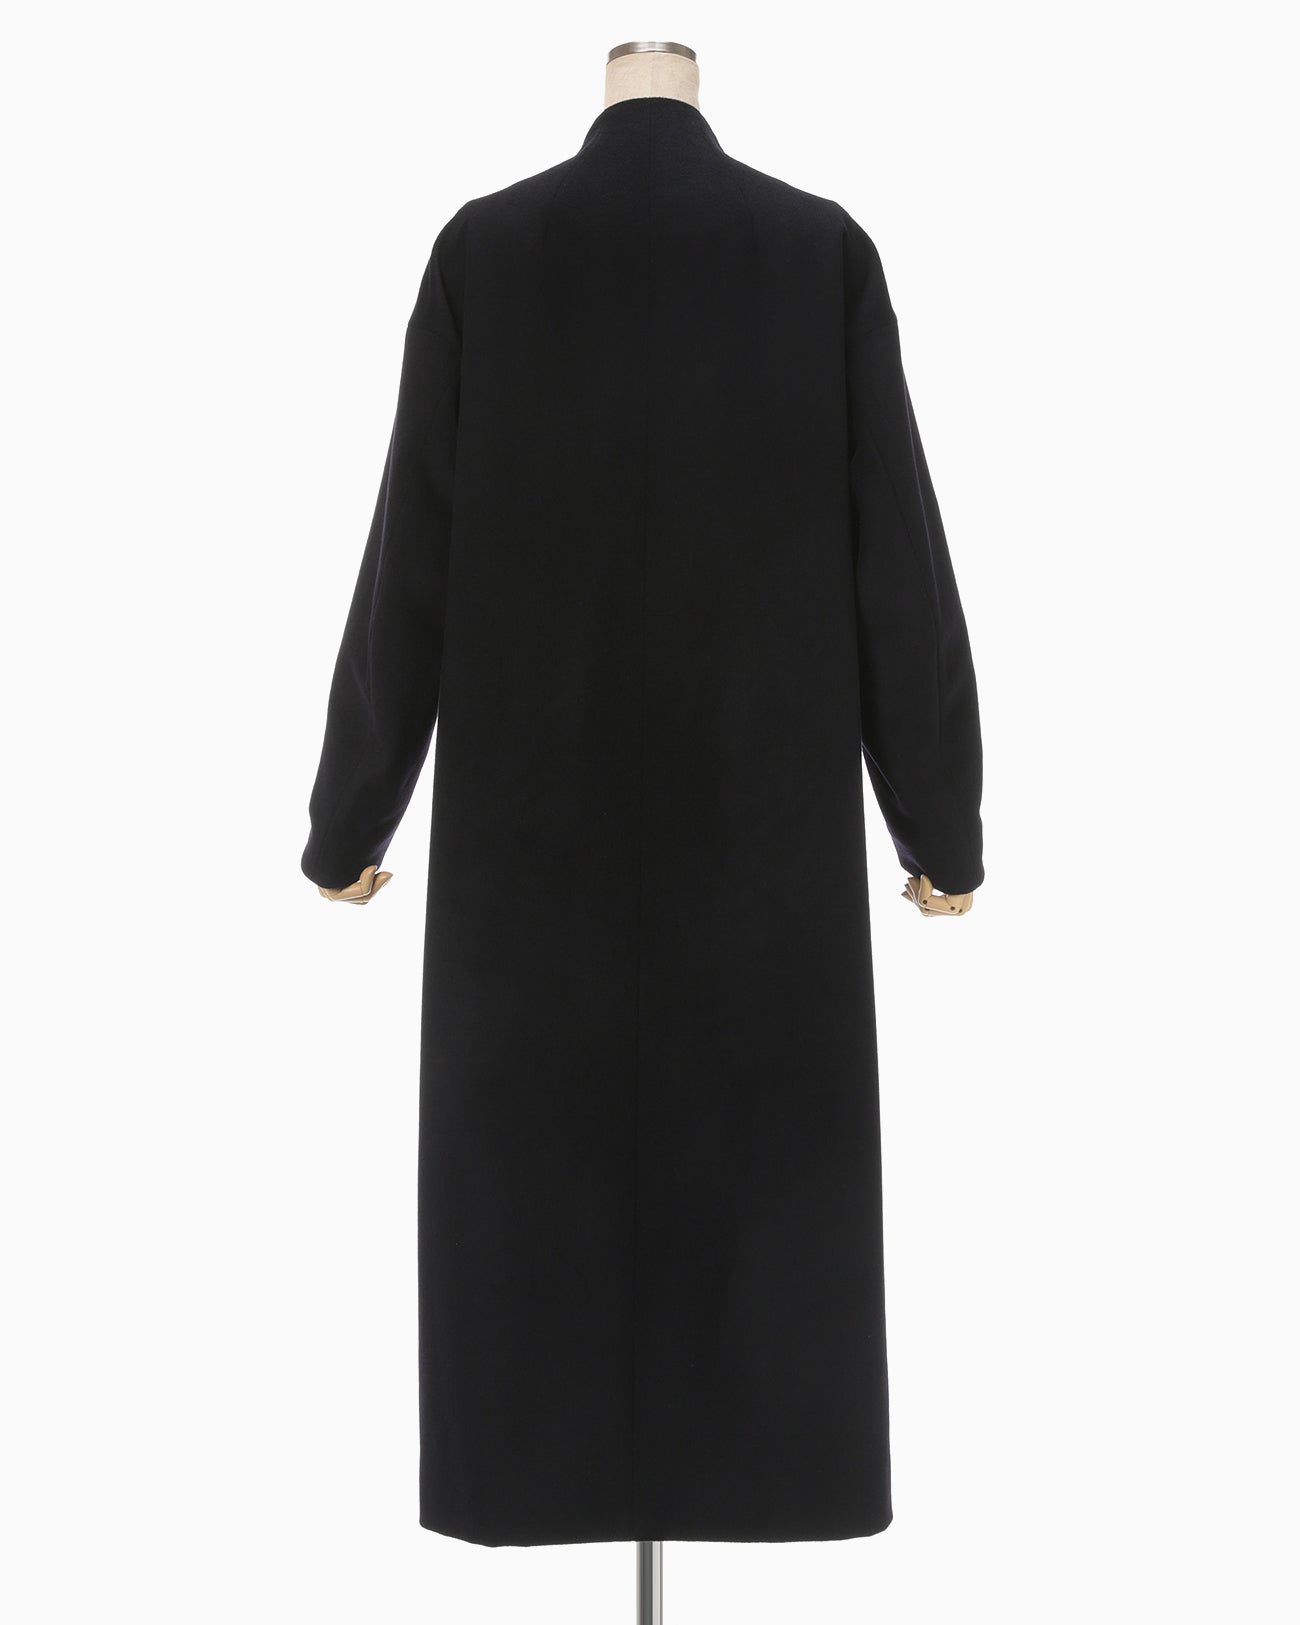 Wool Cashmere I-Line Collarless Coat - black